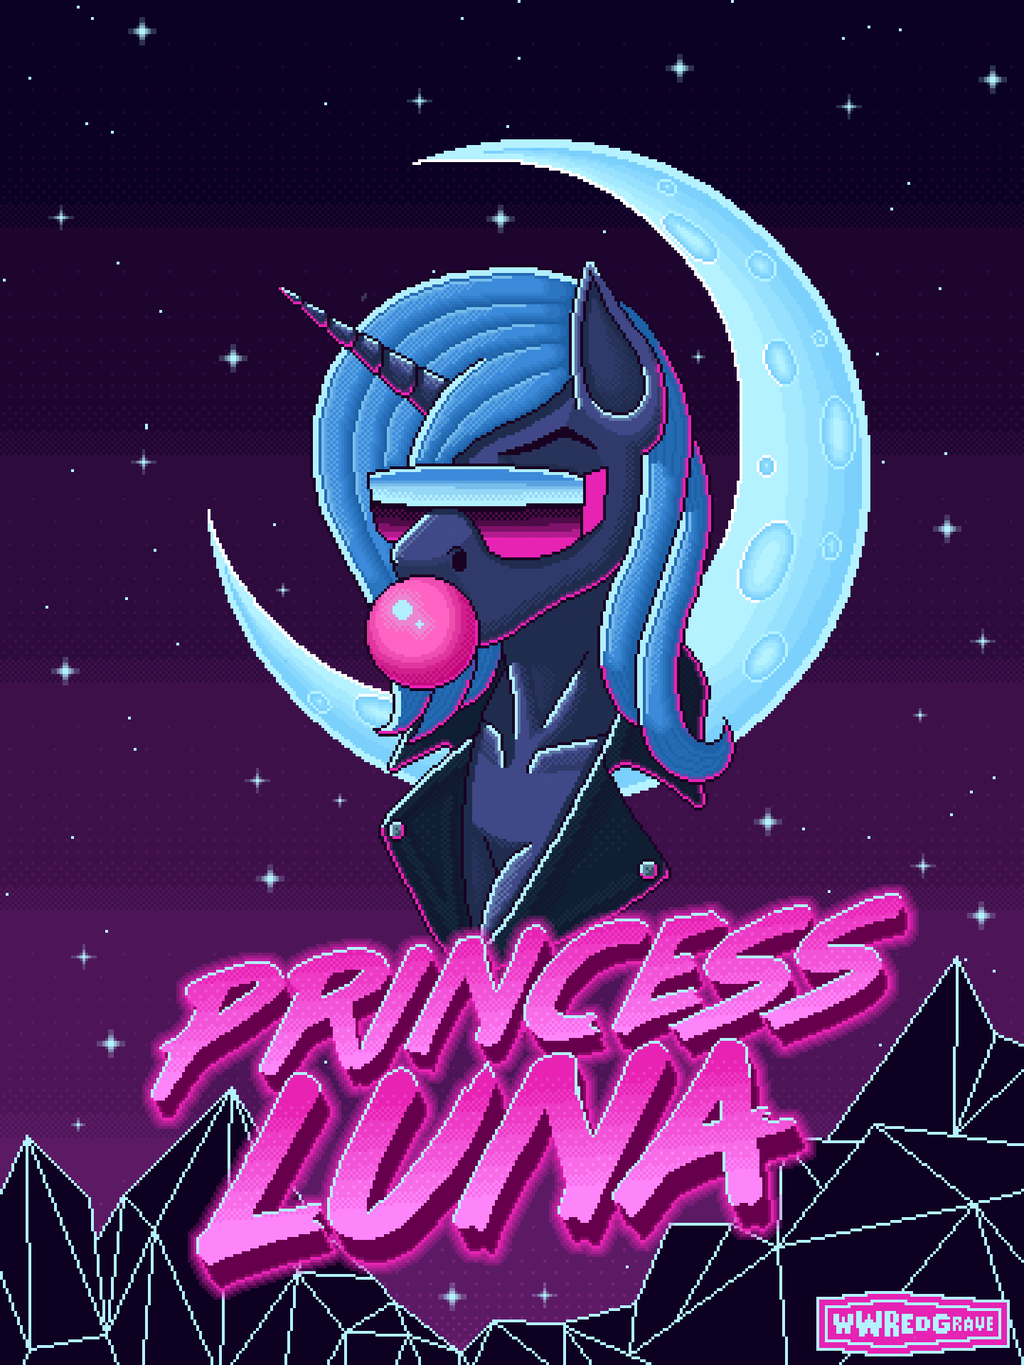 Retrowave Luna - My little pony, Princess luna, Retrowave, Art, Wwredgrave, Longpost